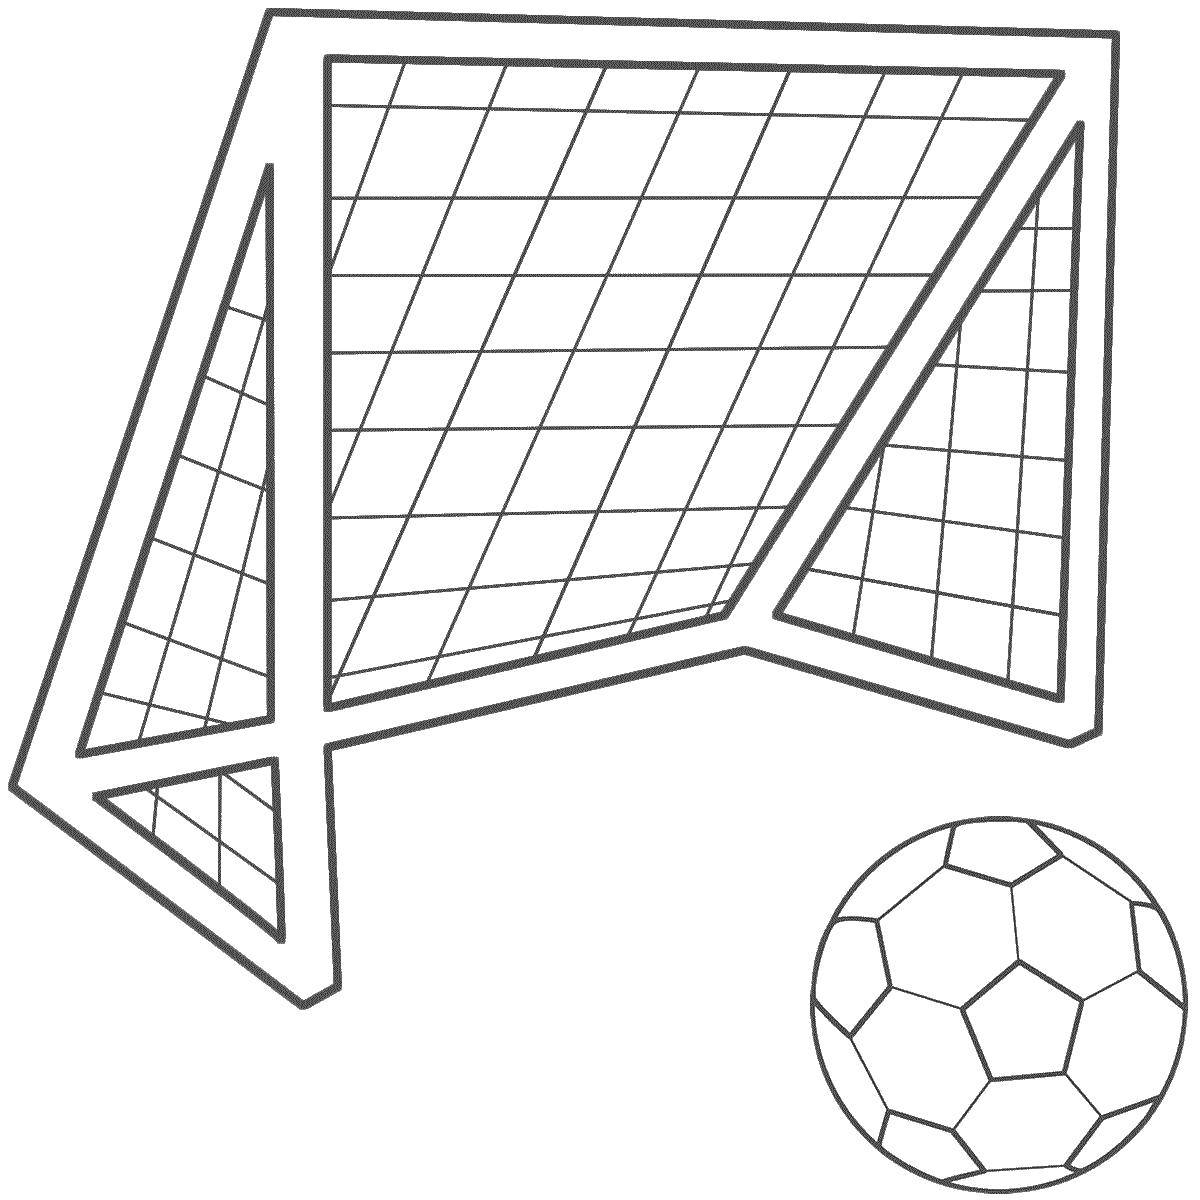 Название: Раскраска Футбольный мяч и ворота. Категория: Спорт. Теги: Спорт, футбол, мяч, игра.